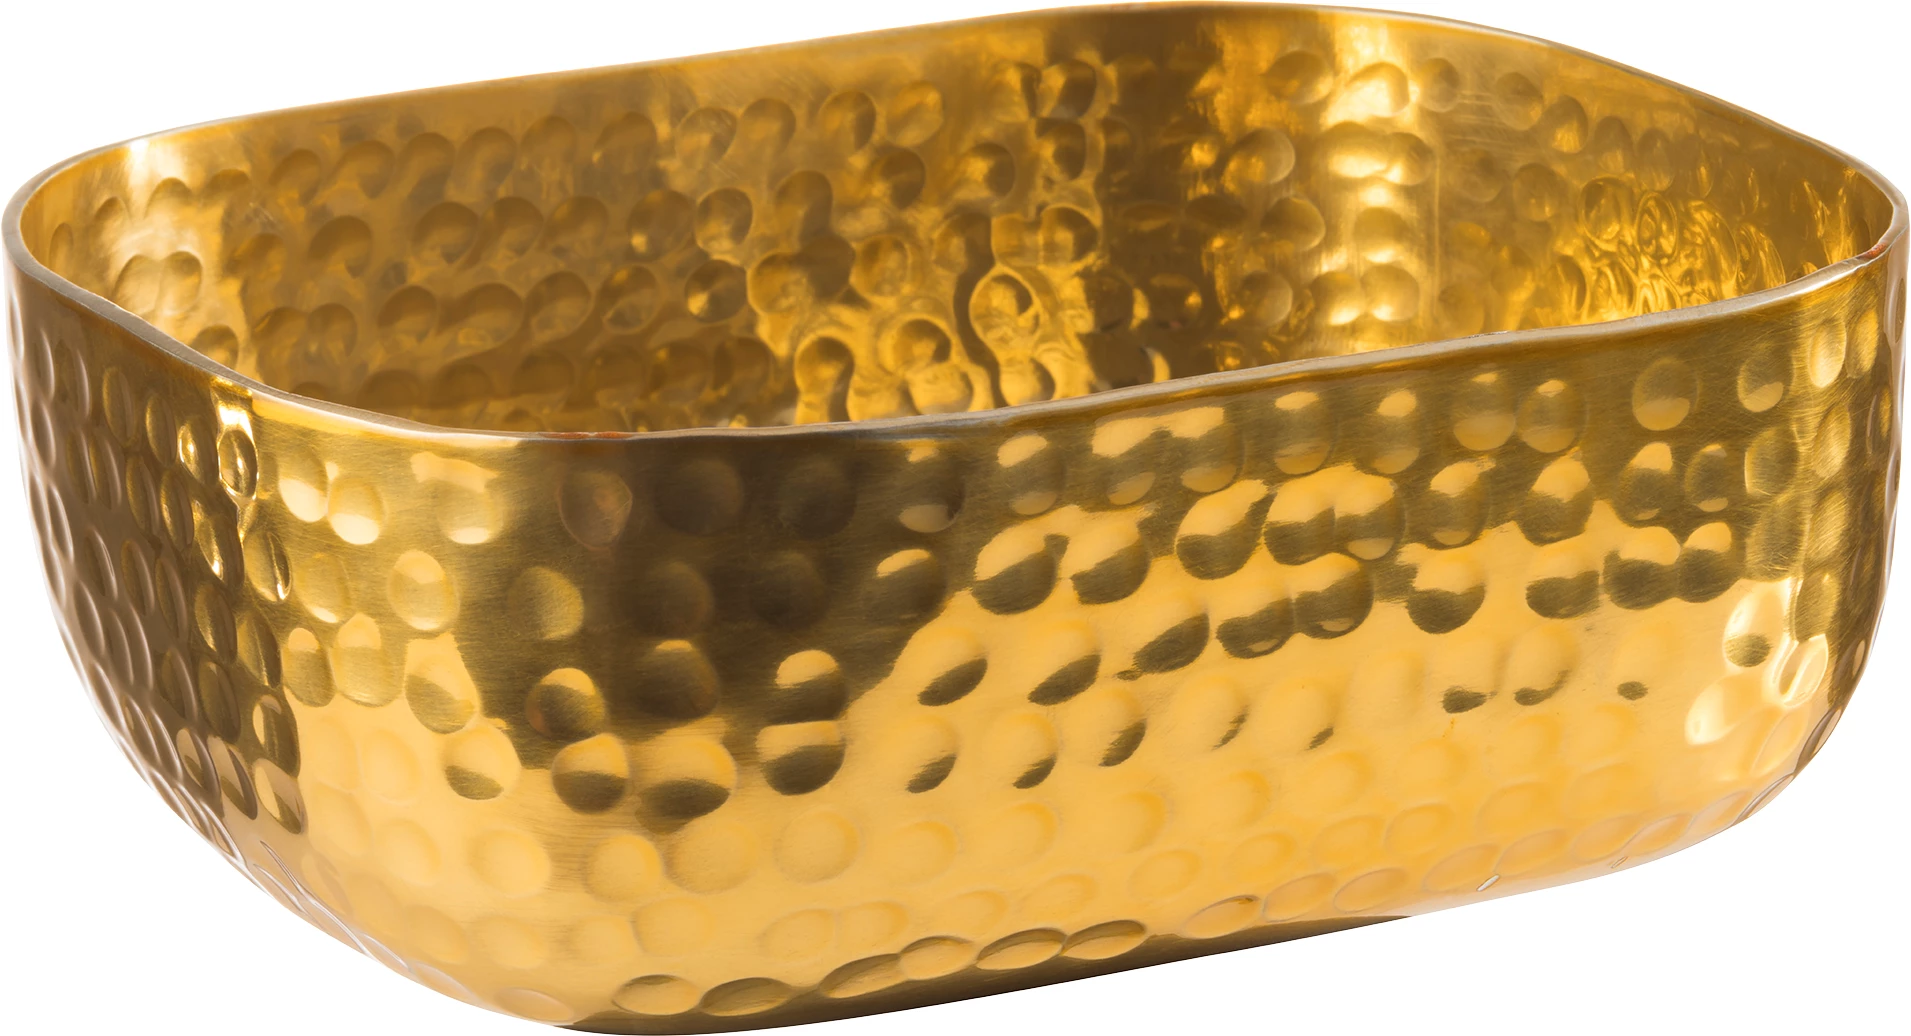 APS skål, alu/guld, 70 cl, 15,5 x 12 cm